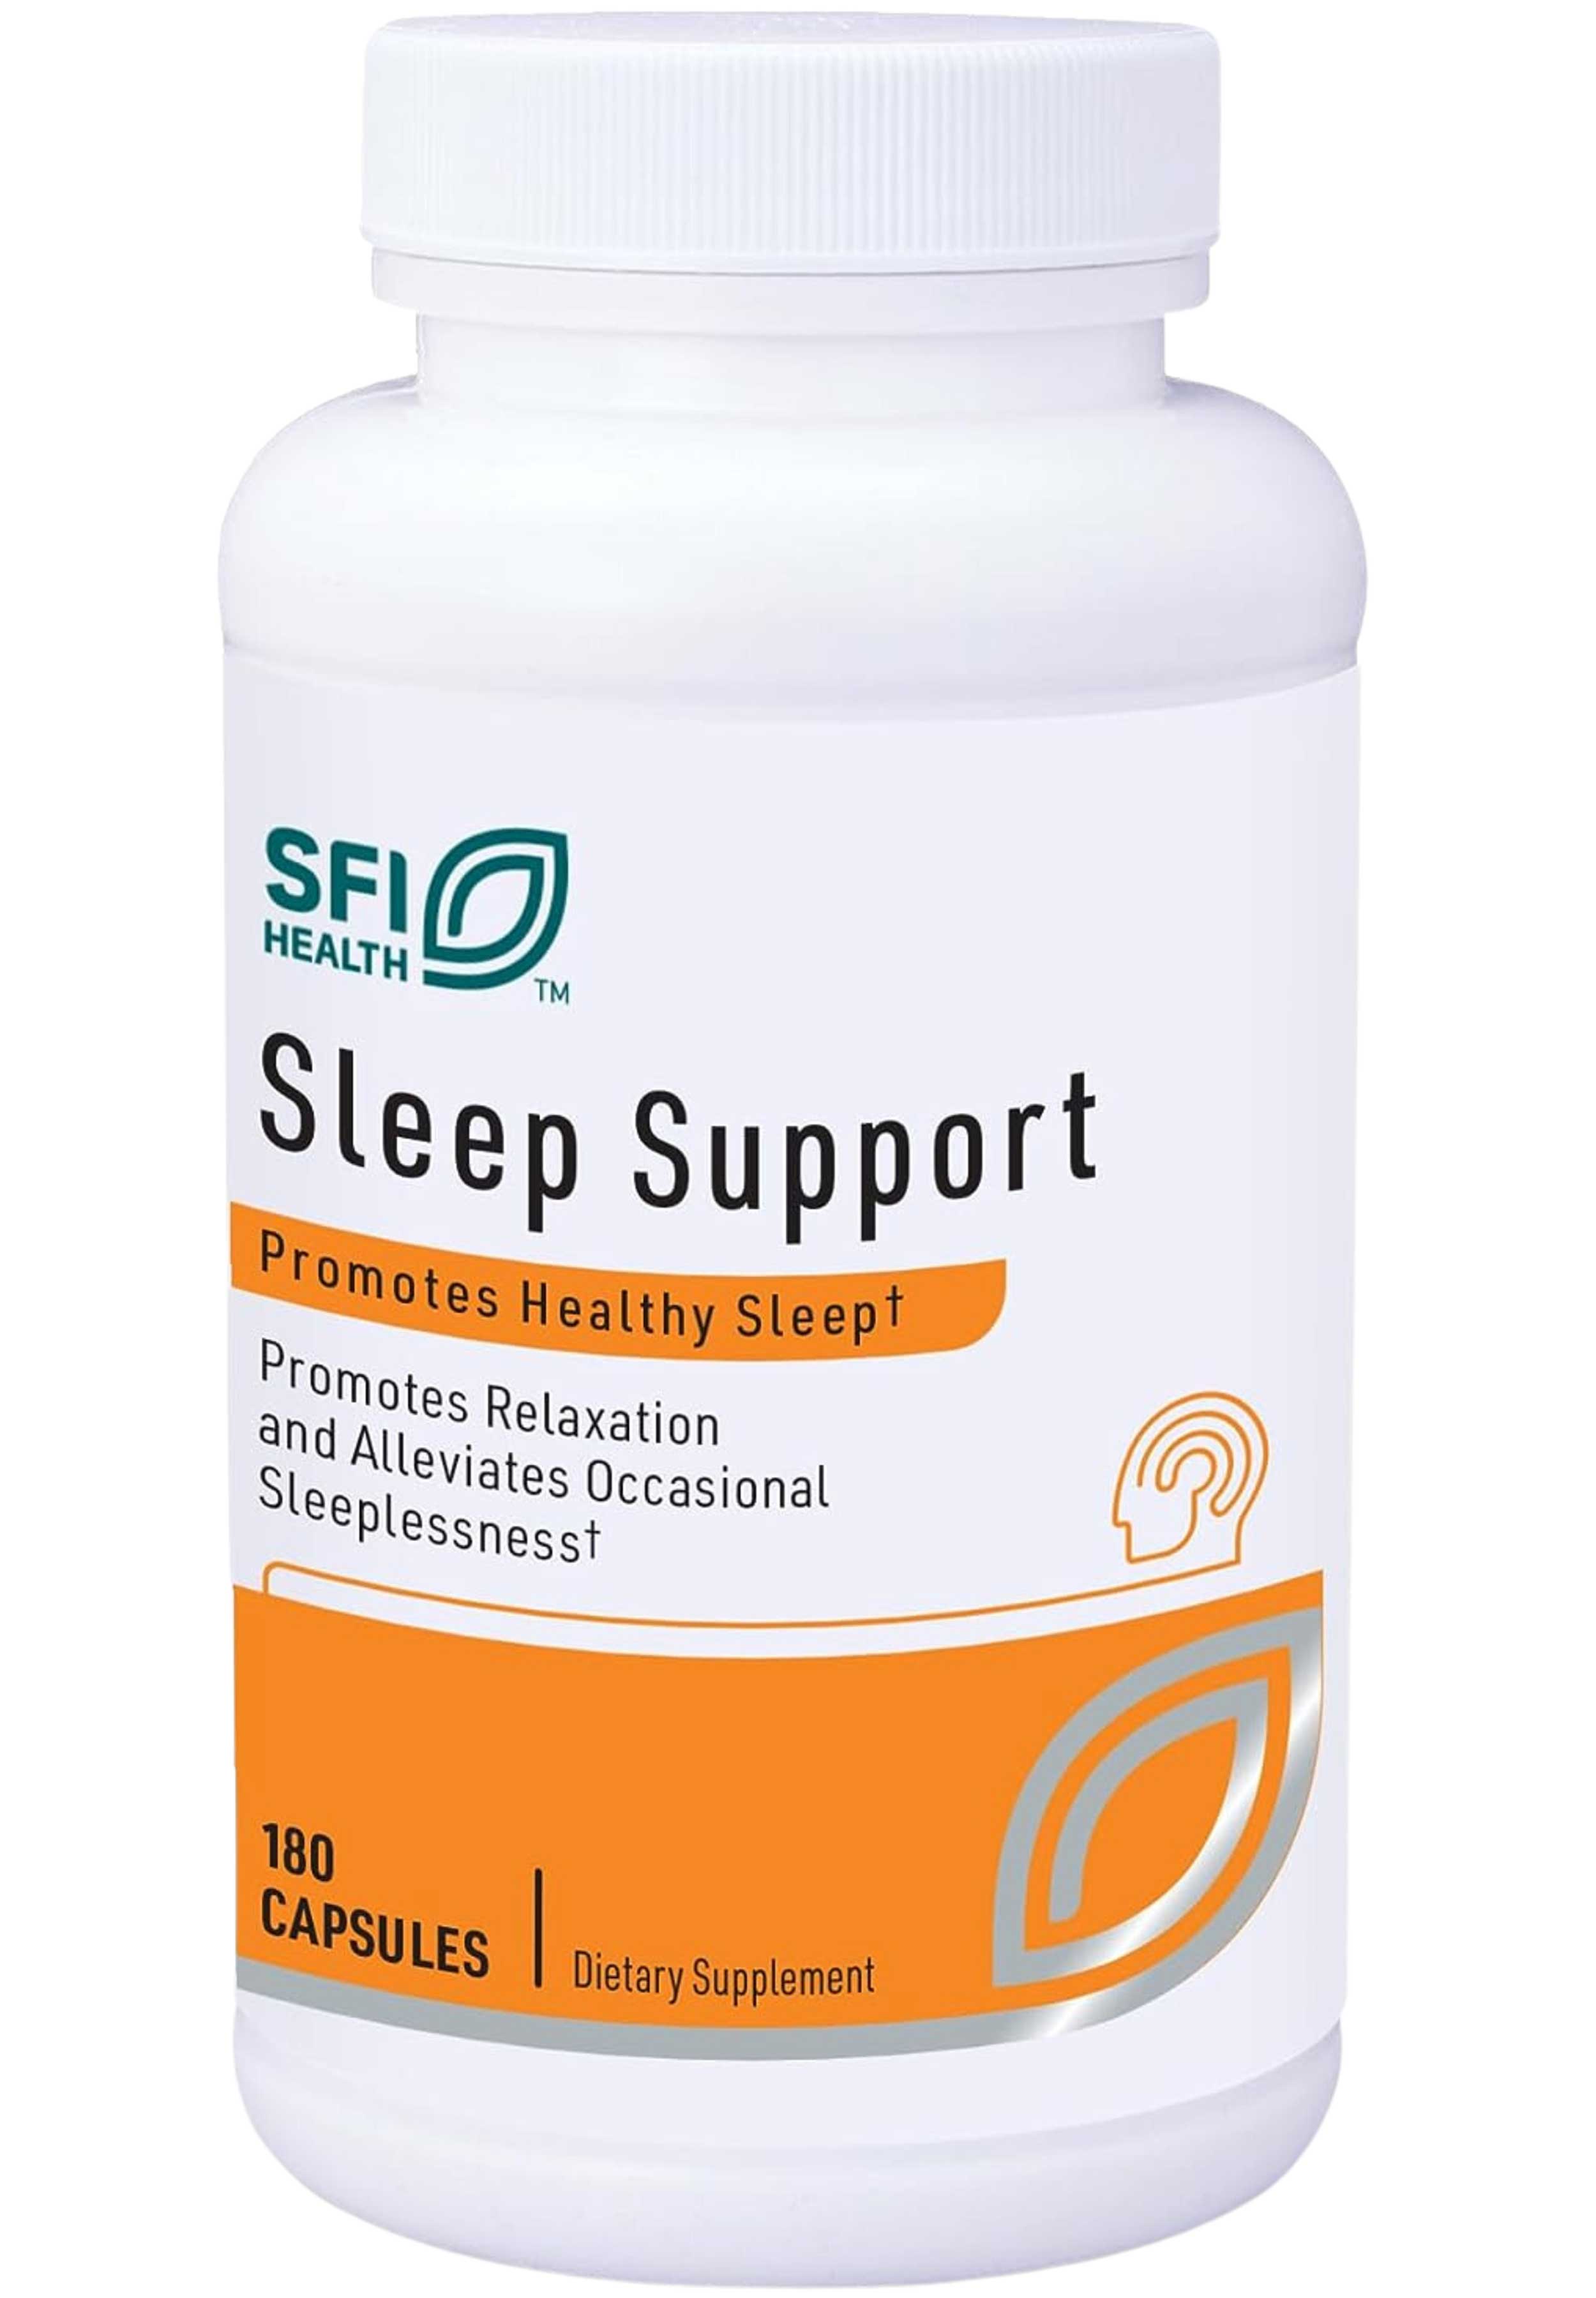 Klaire Labs Sleep Support